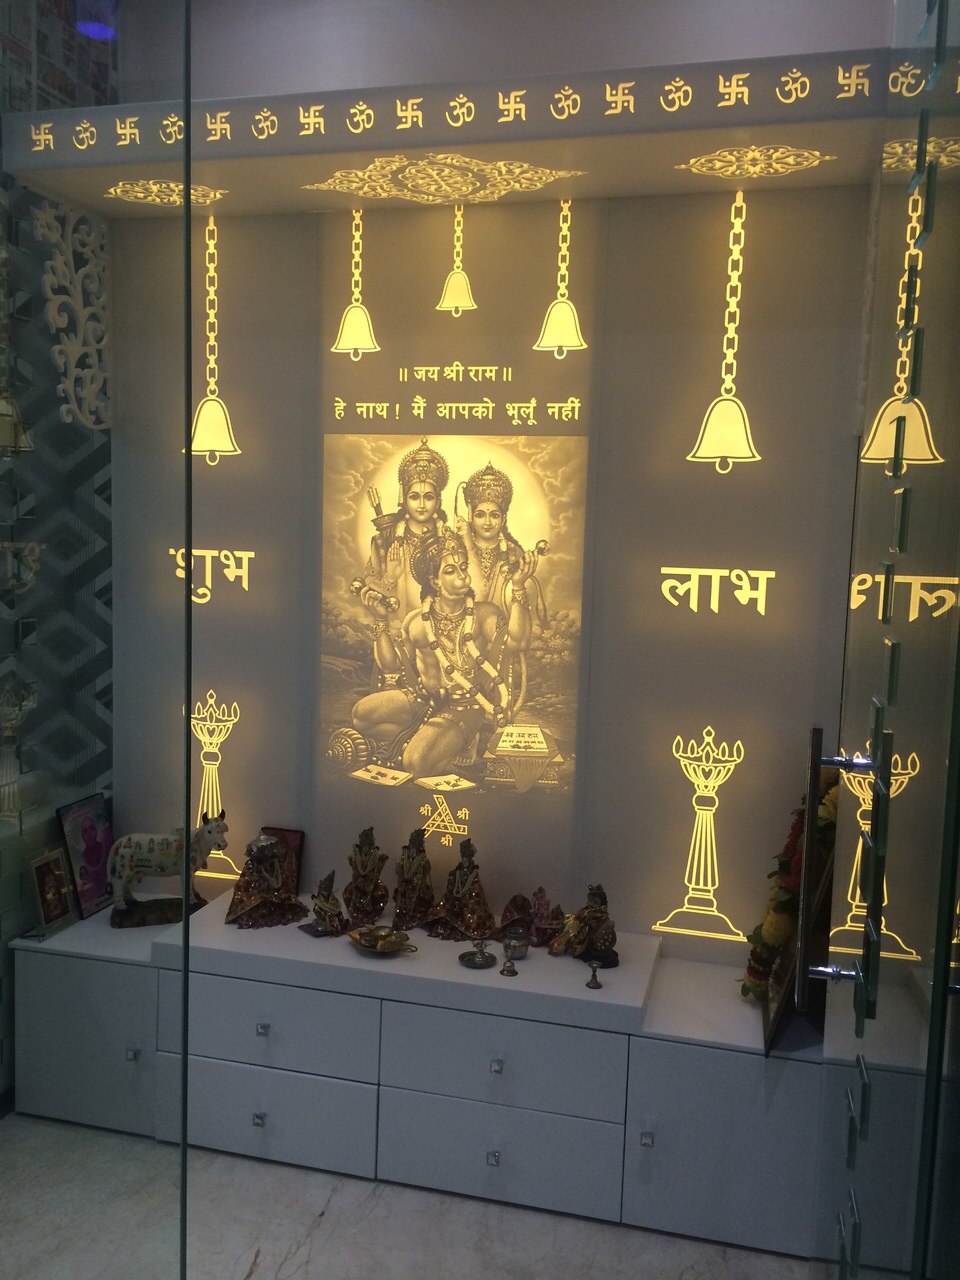 temple mandir puja acrylic pooja corian mandirs interior designs simple prayer door shades led cnc interiors rooms interested